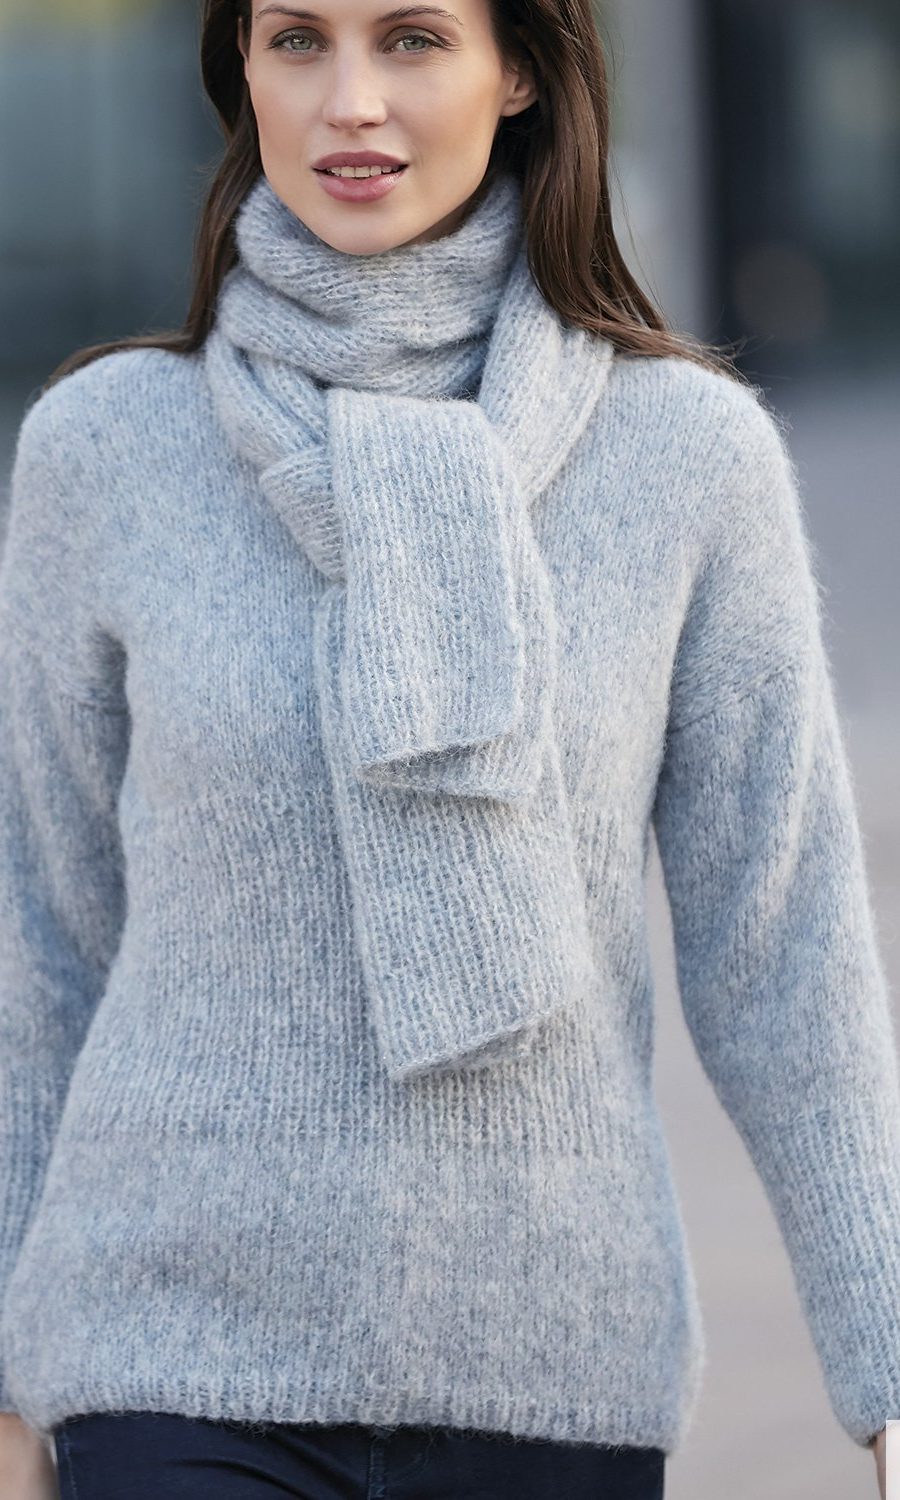 pattern-knit-crochet-woman-sweater-autumn-winter-katia-6092-20-g